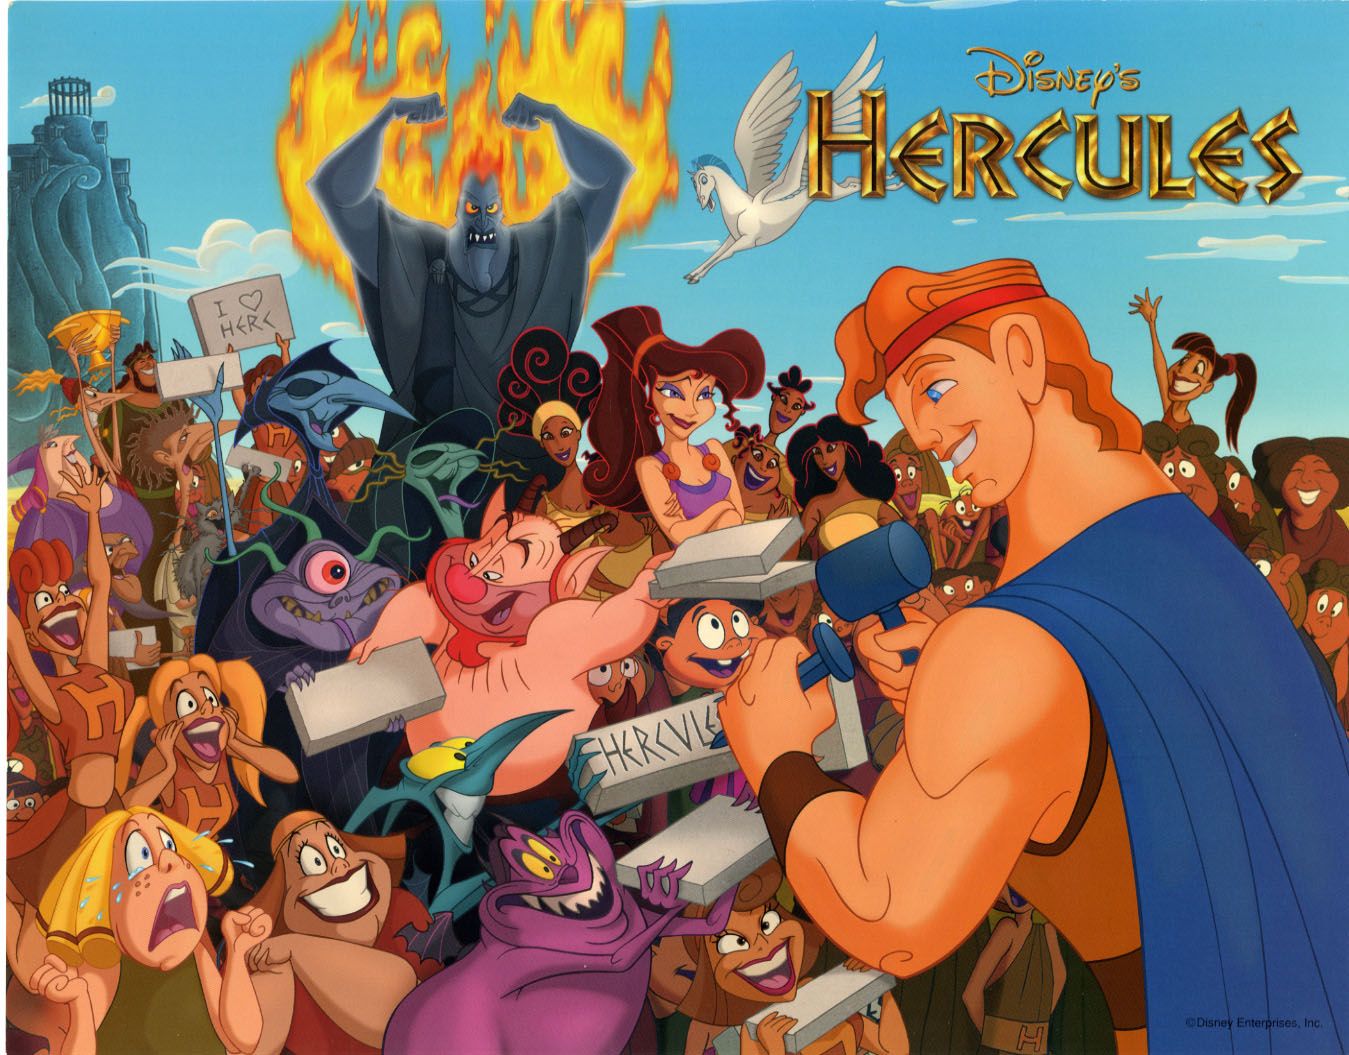 Disney Hercules Cartoon Wallpaper Image for iPhone 6